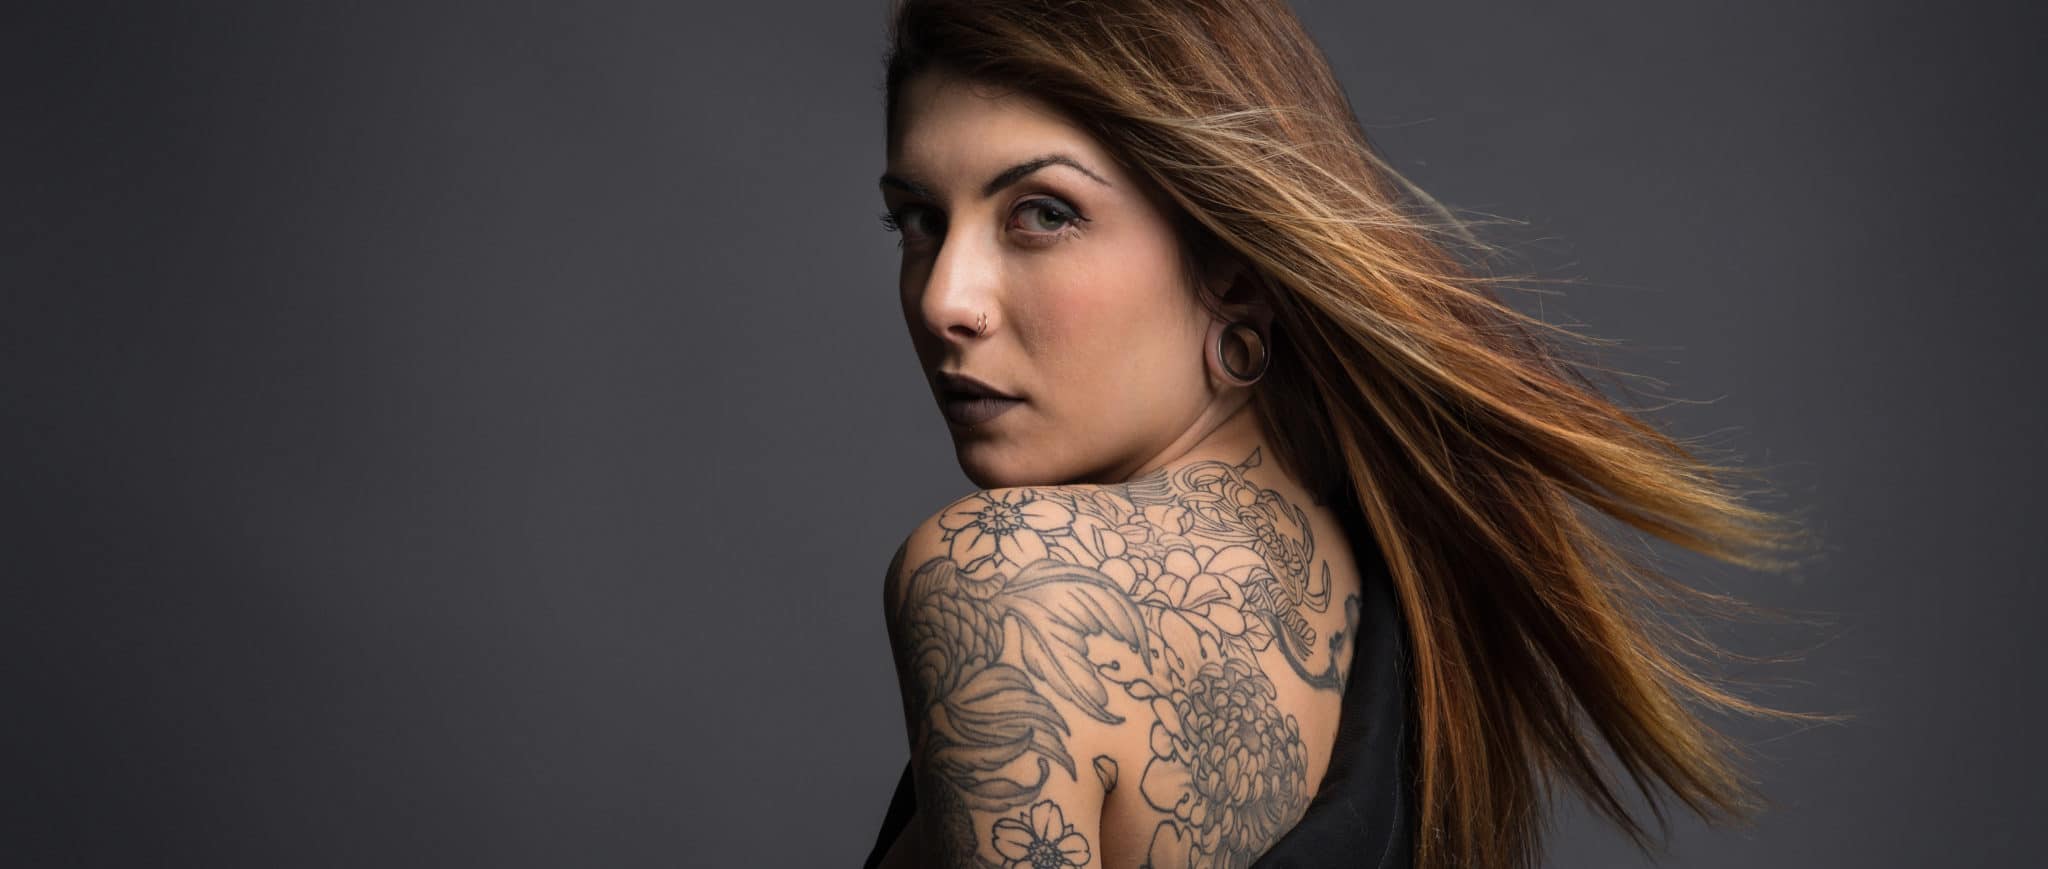 Can Models Have Tattoos? - UK Models